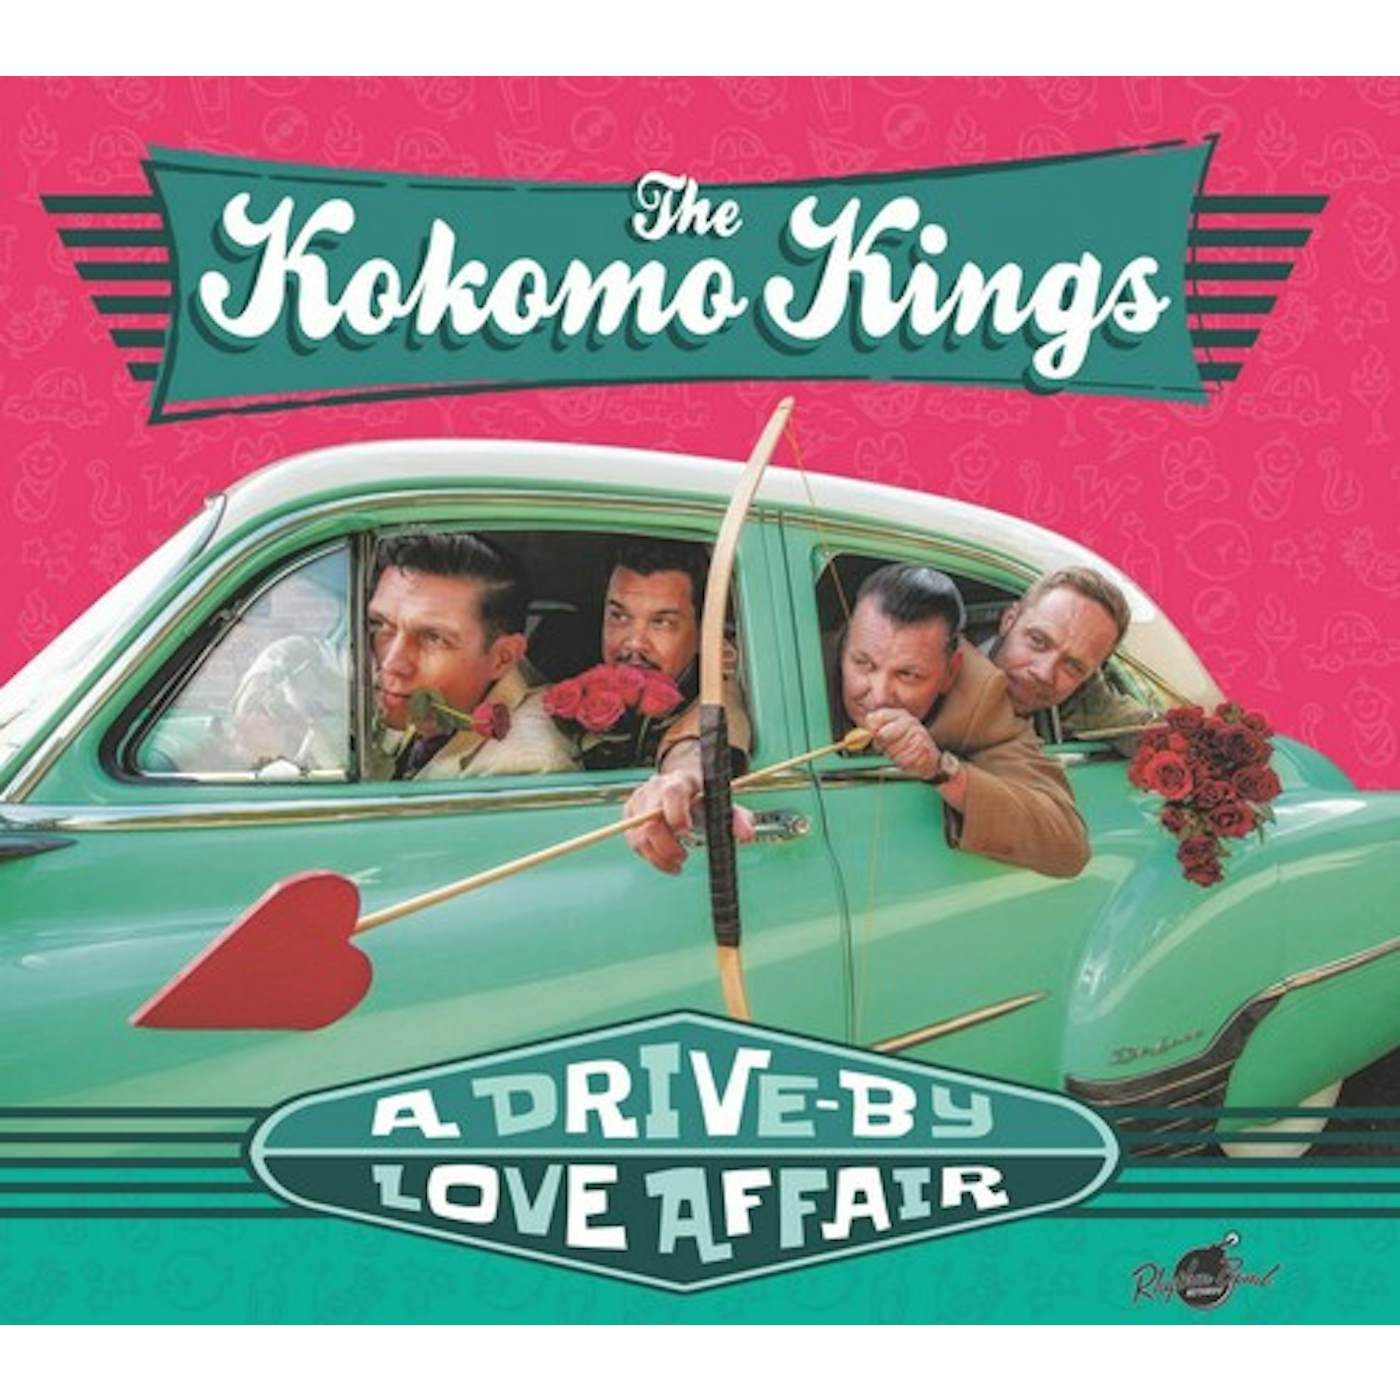 The Kokomo Kings DRIVE-BY LOVE AFFAIR Vinyl Record